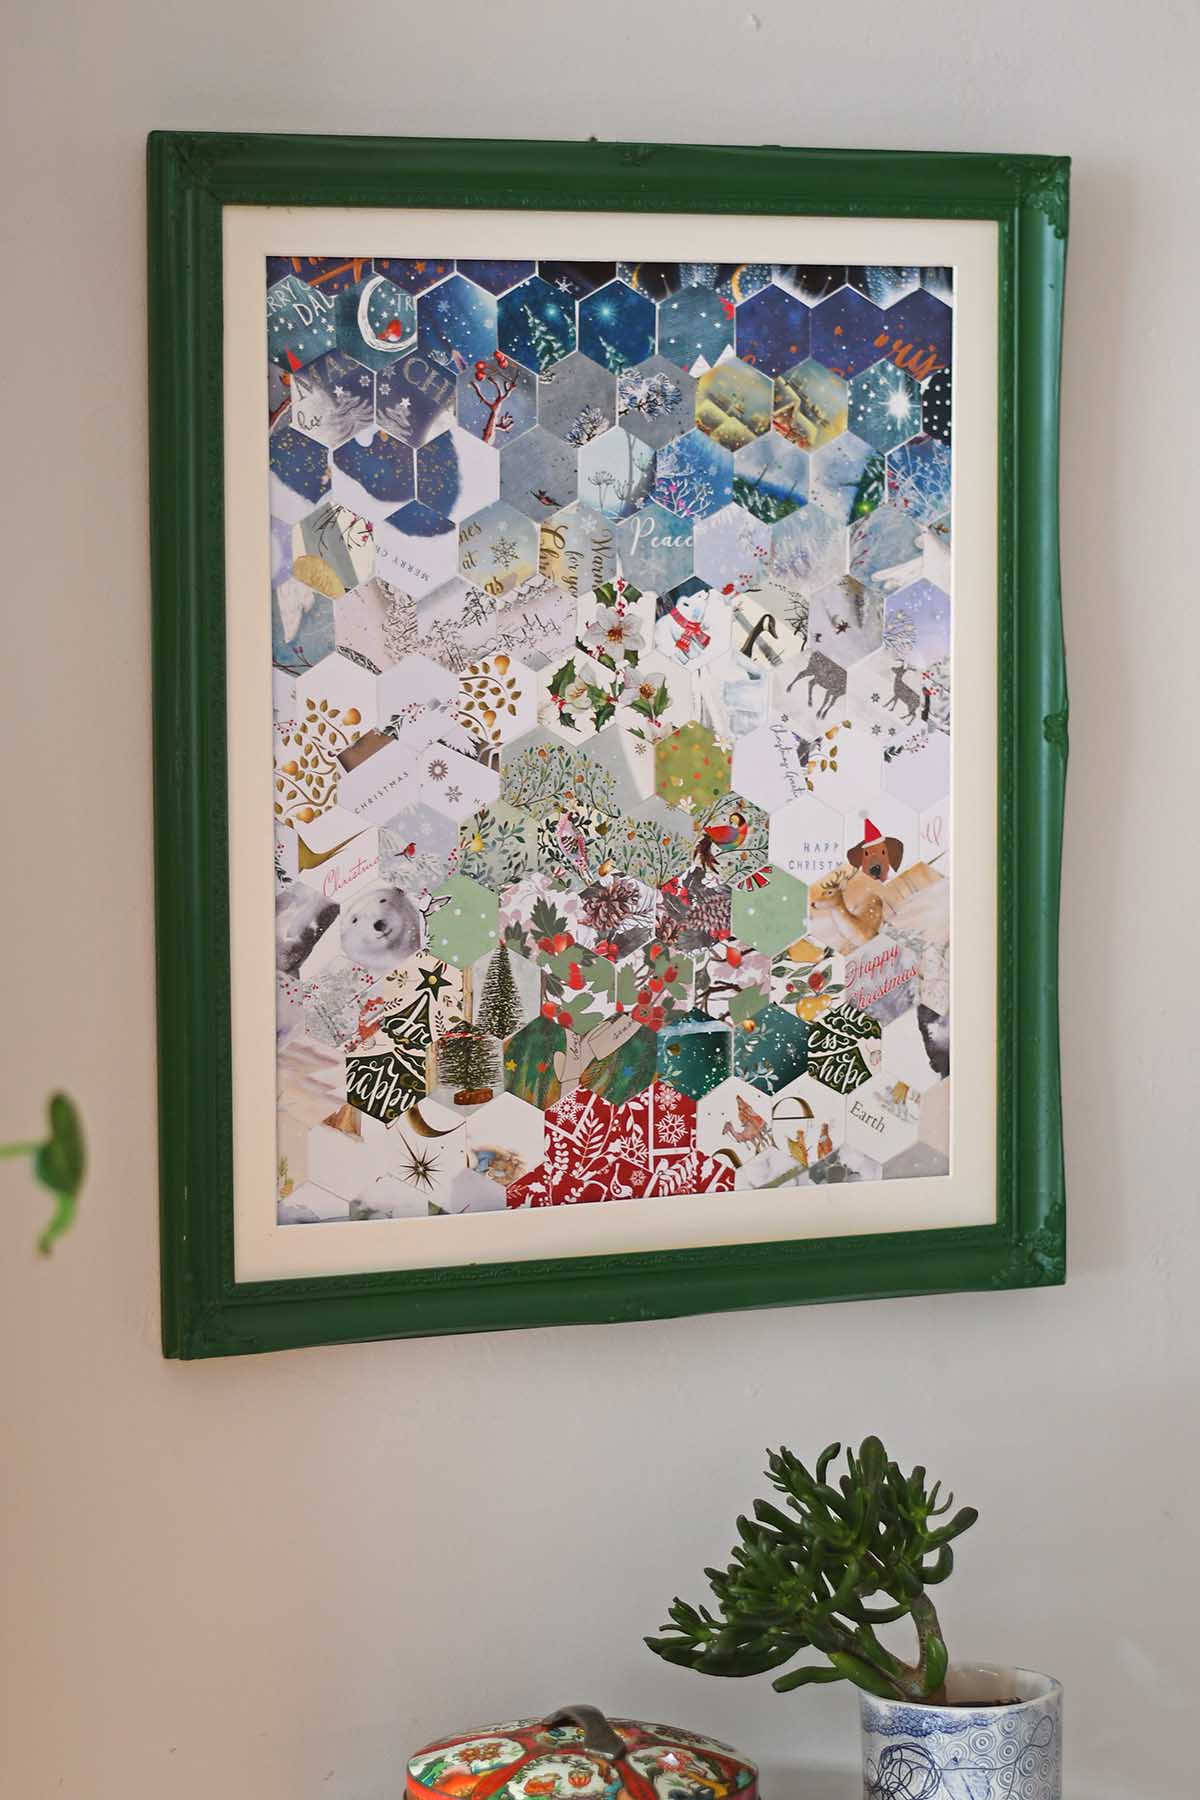 Christmas card art framed and hung